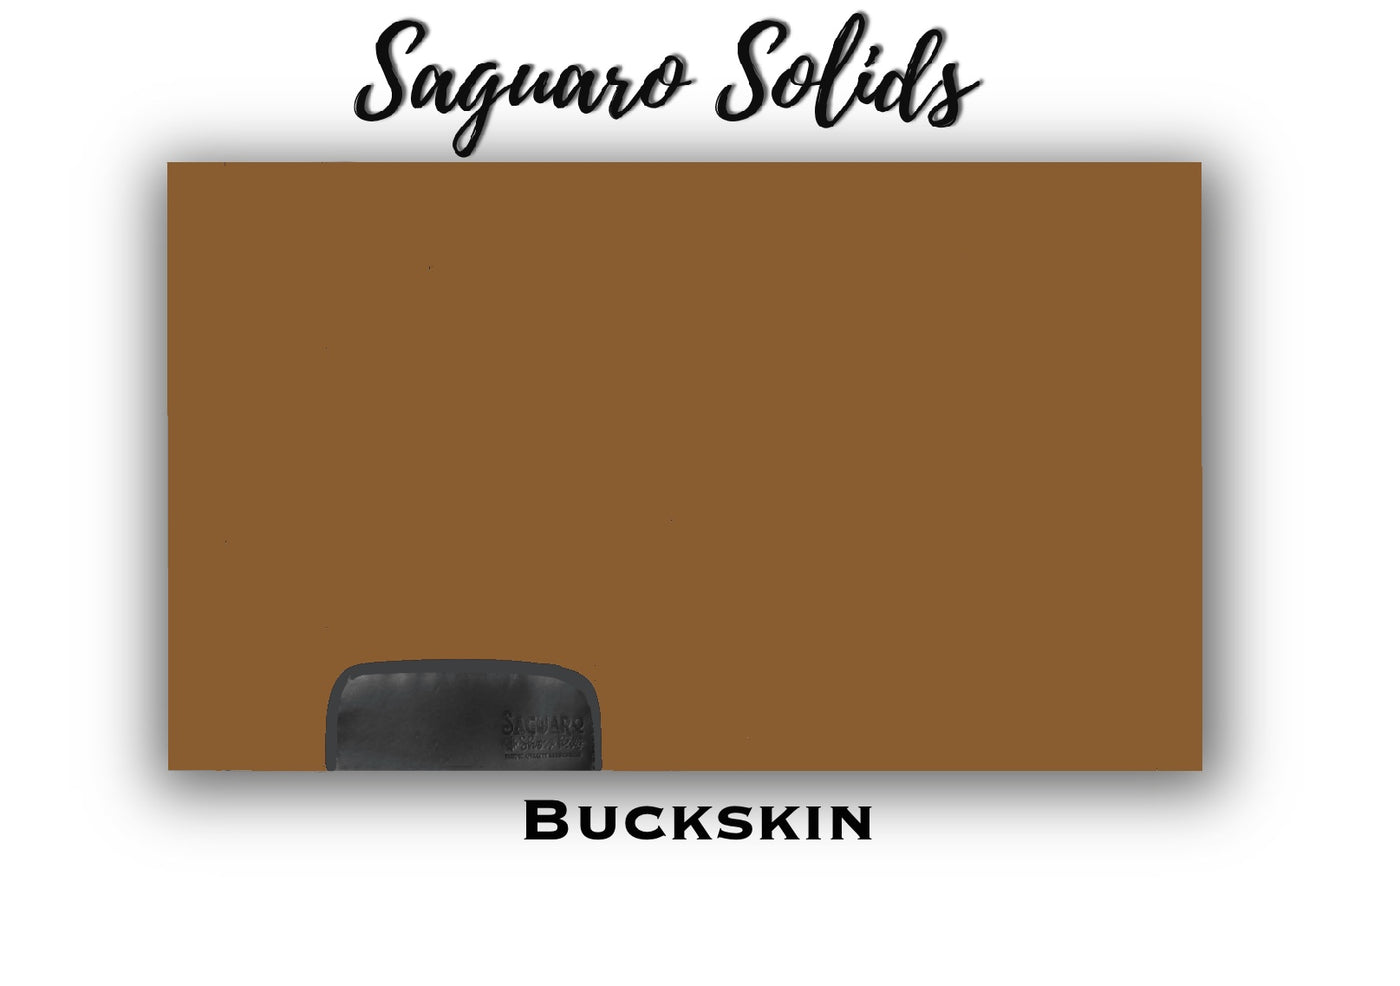 Saguaro Solid "Buckskin" Show Pad (SEMI-CUSTOM)